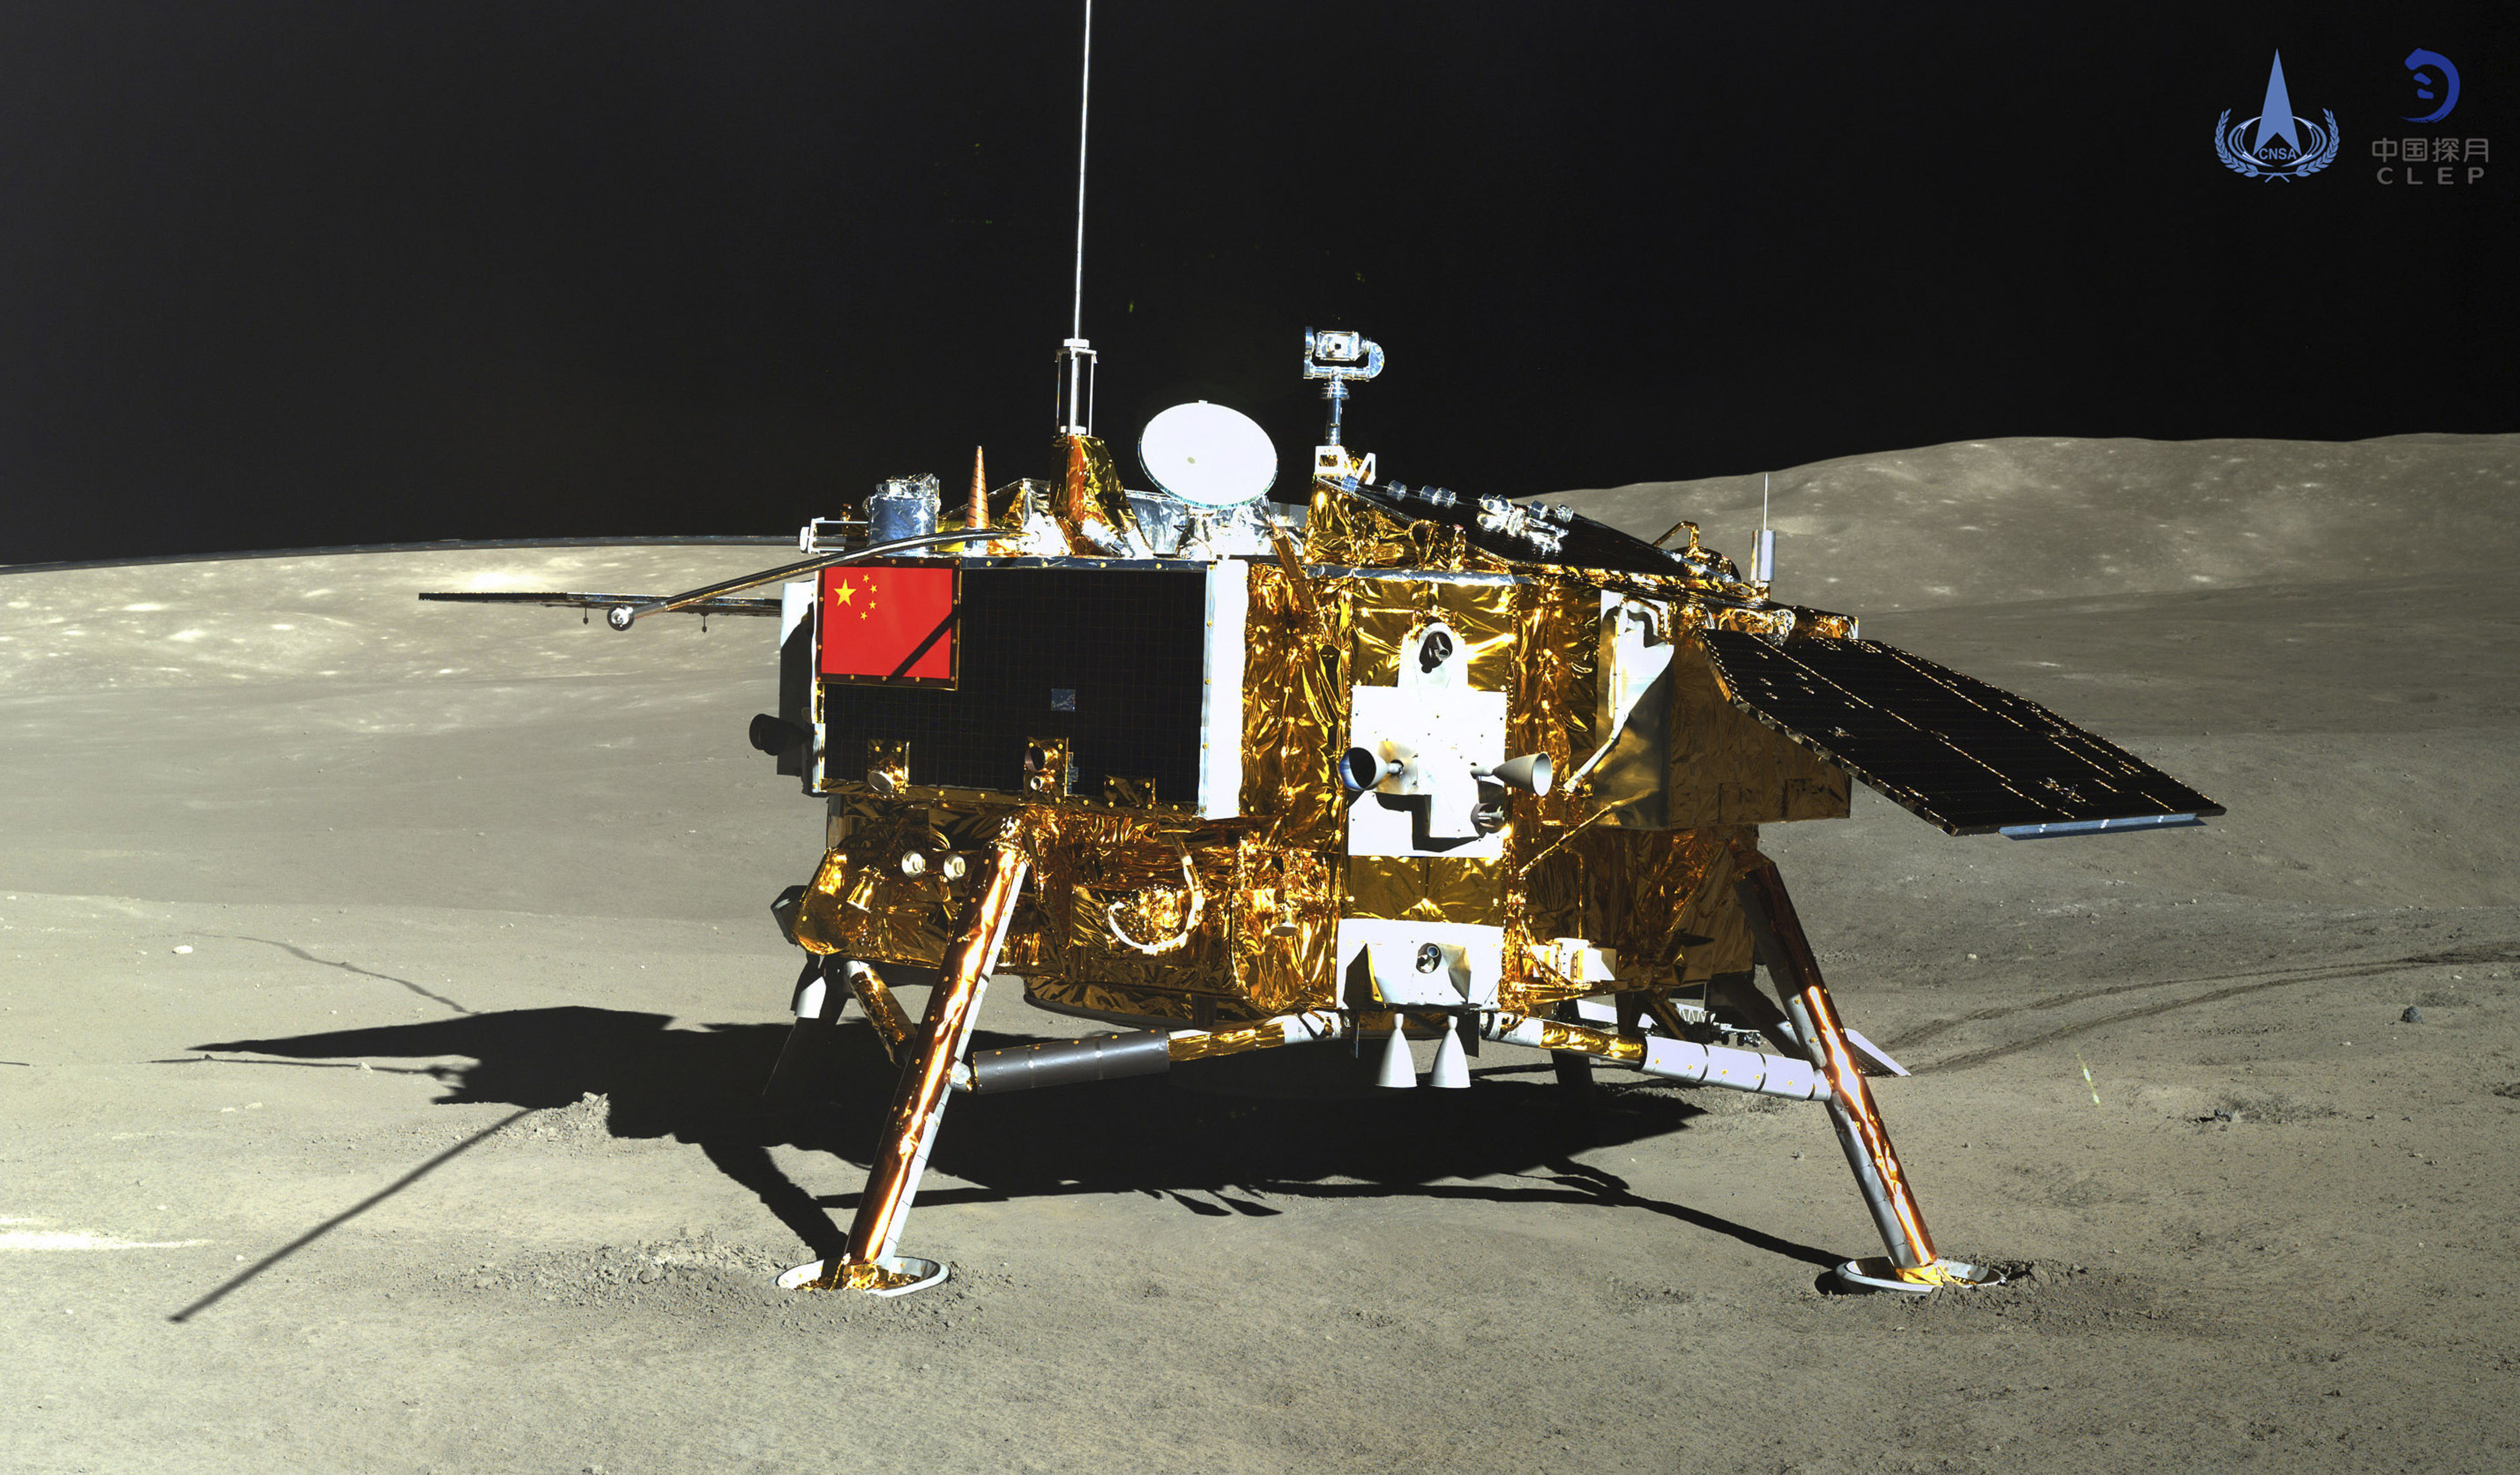 Космические аппараты на луне. Посадочный модуль Чанъэ-4. Китайский Луноход Чанъэ 5. Китайский зонд "Чанъэ-4". Луноход Юйту-2.